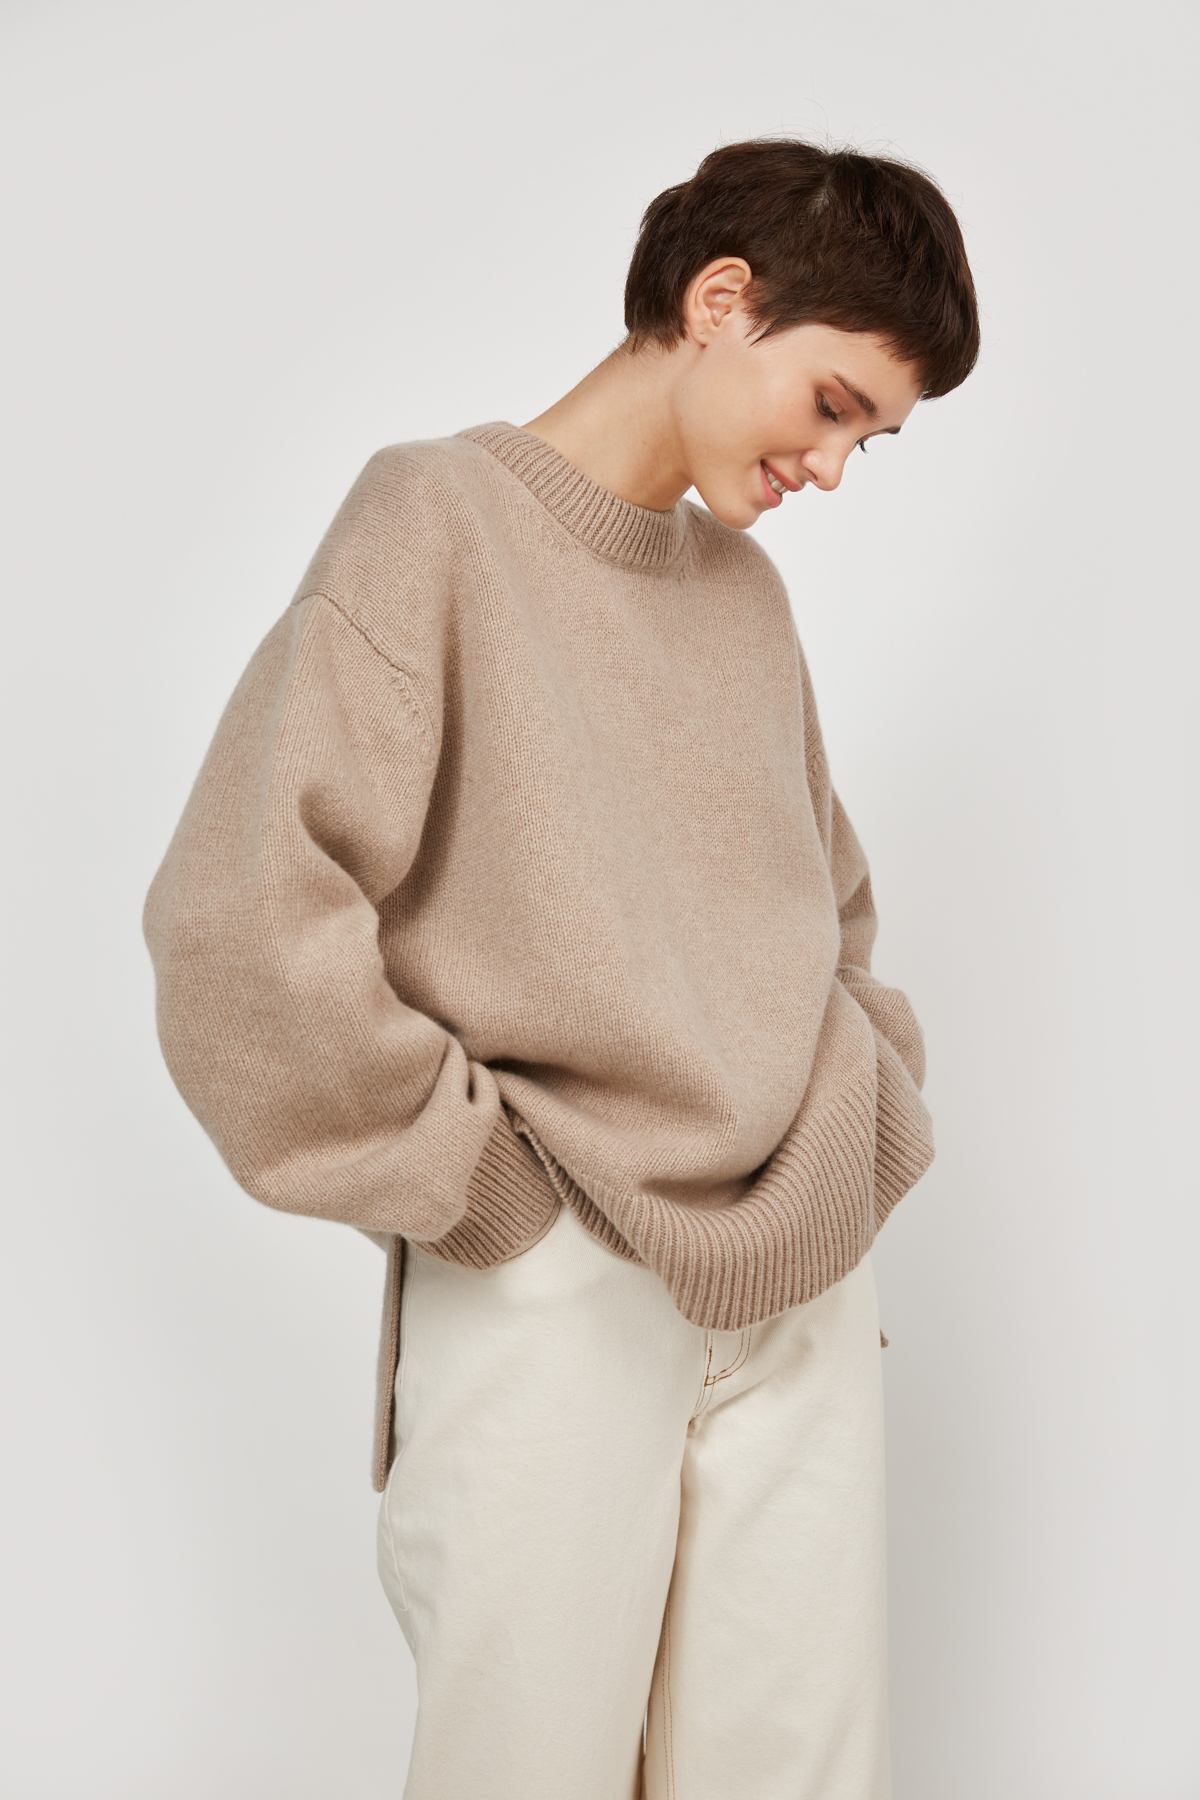 Beige cashmere sweater, photo 2